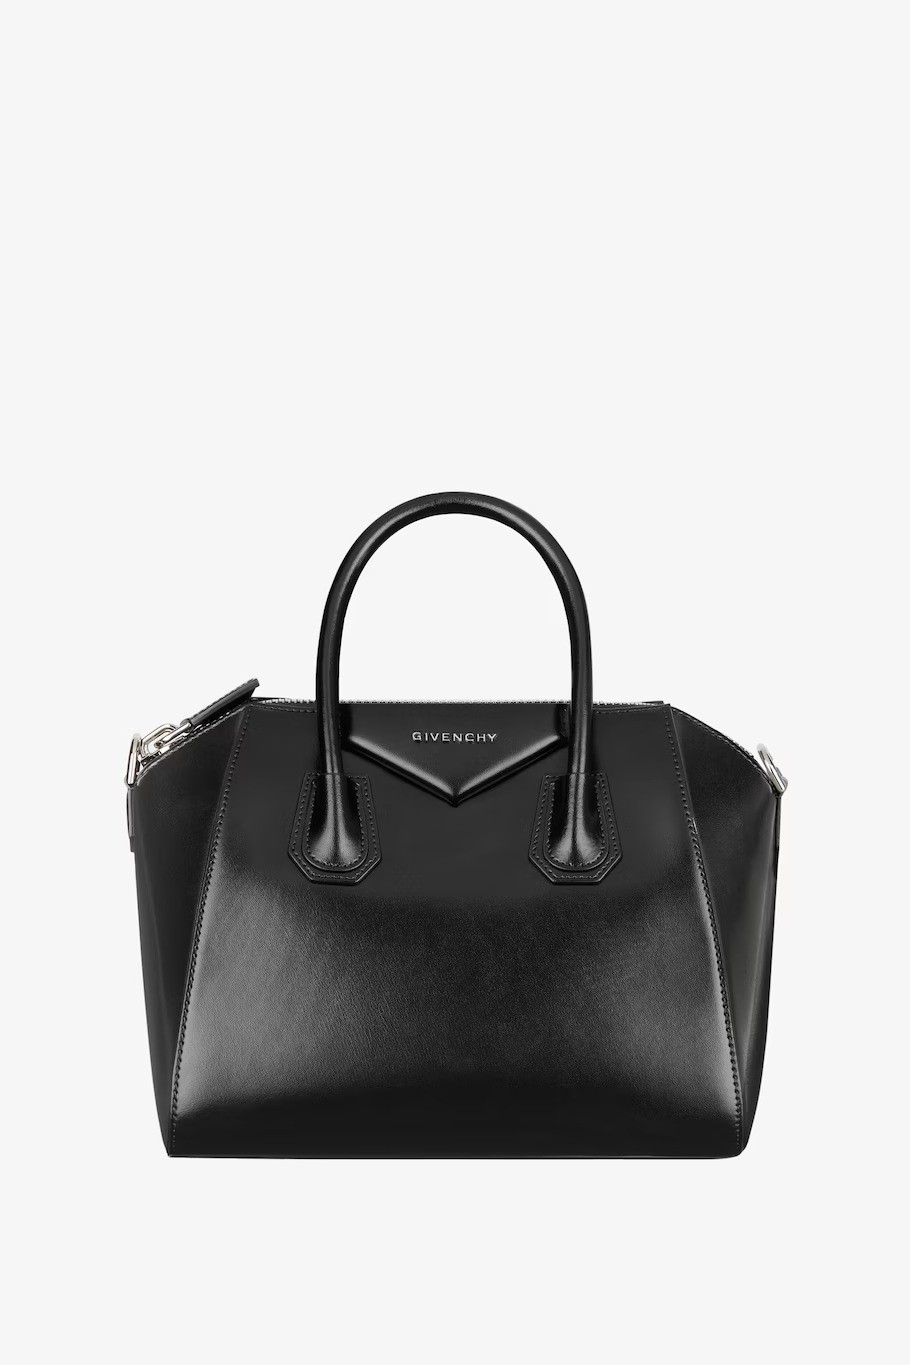 Givenchy - Small Antigona bag in Box leather - Black